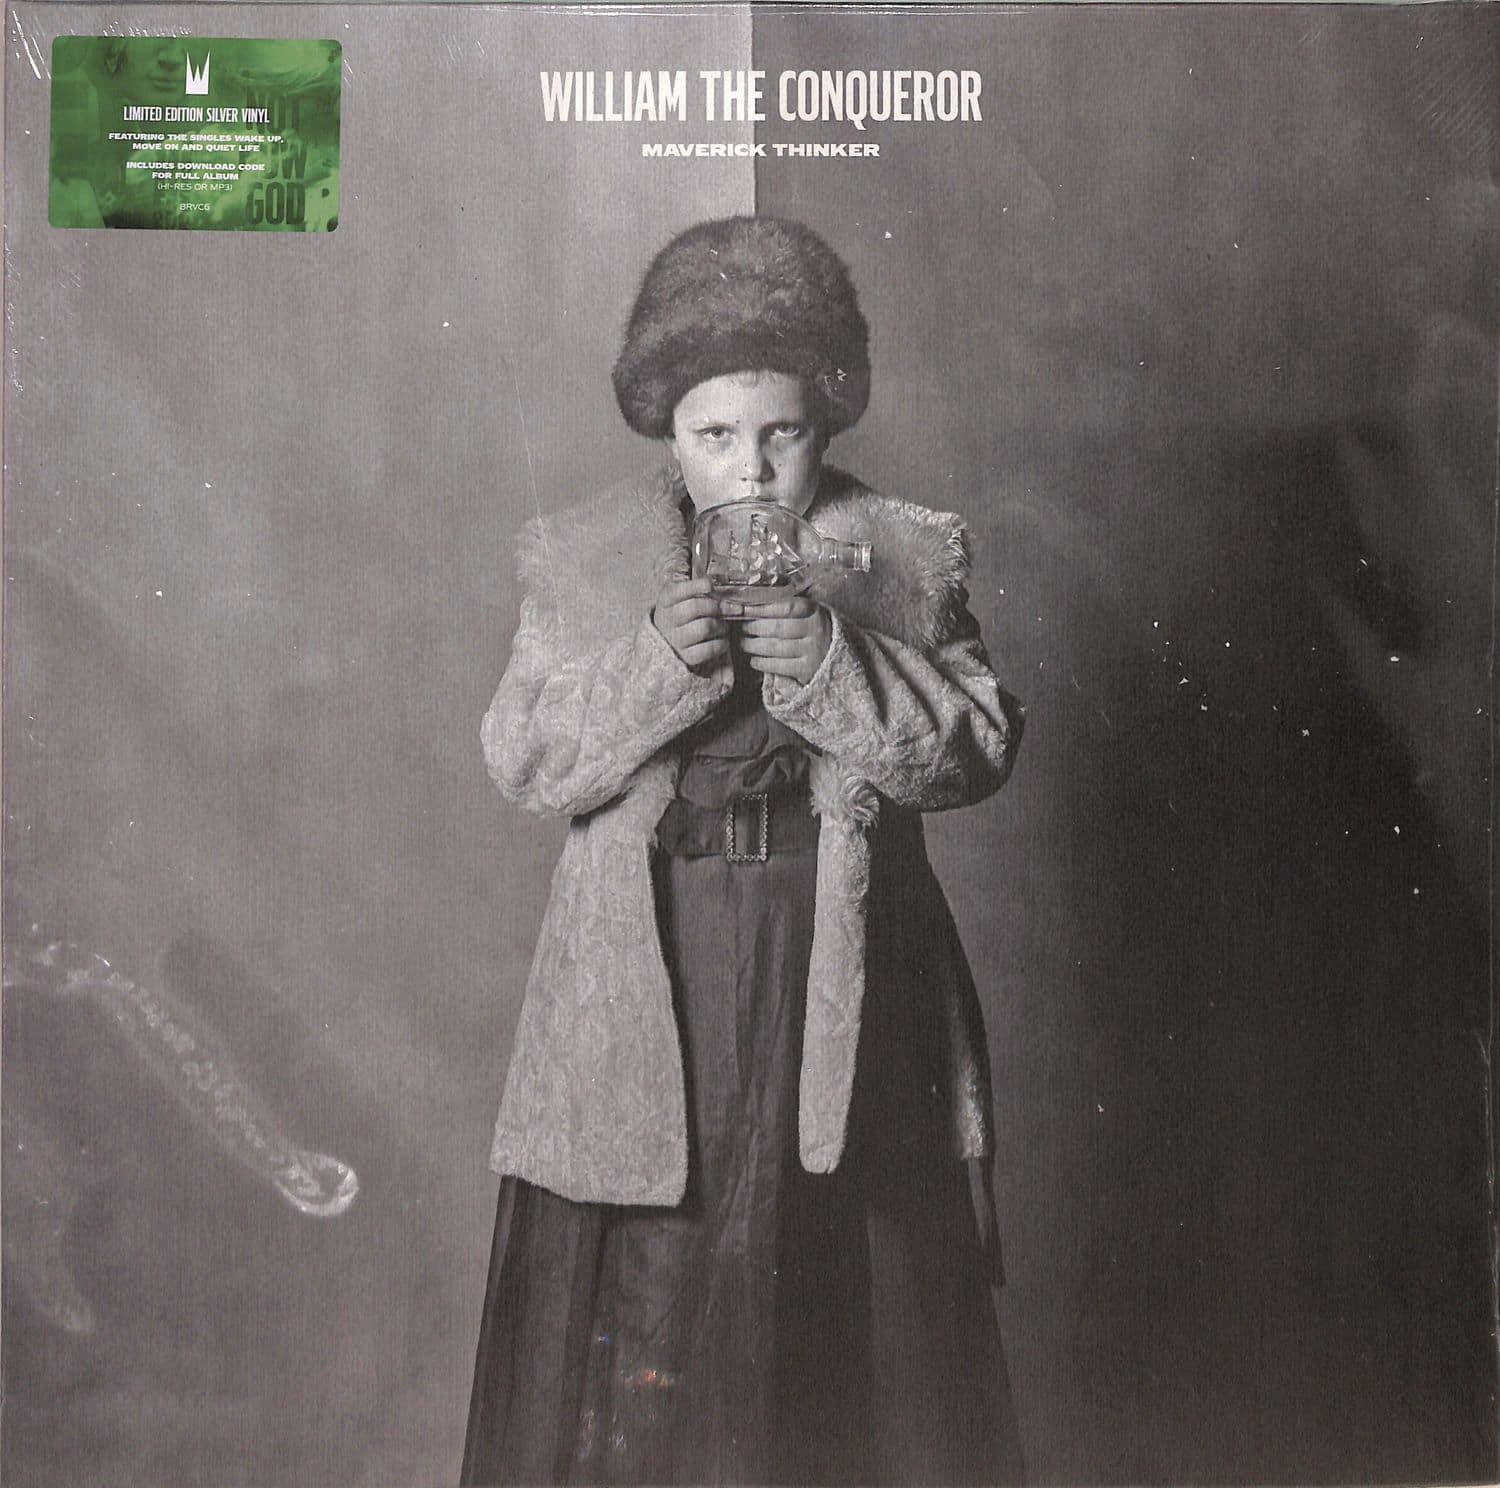 William The Conqueror - MAVERICK THINKER 